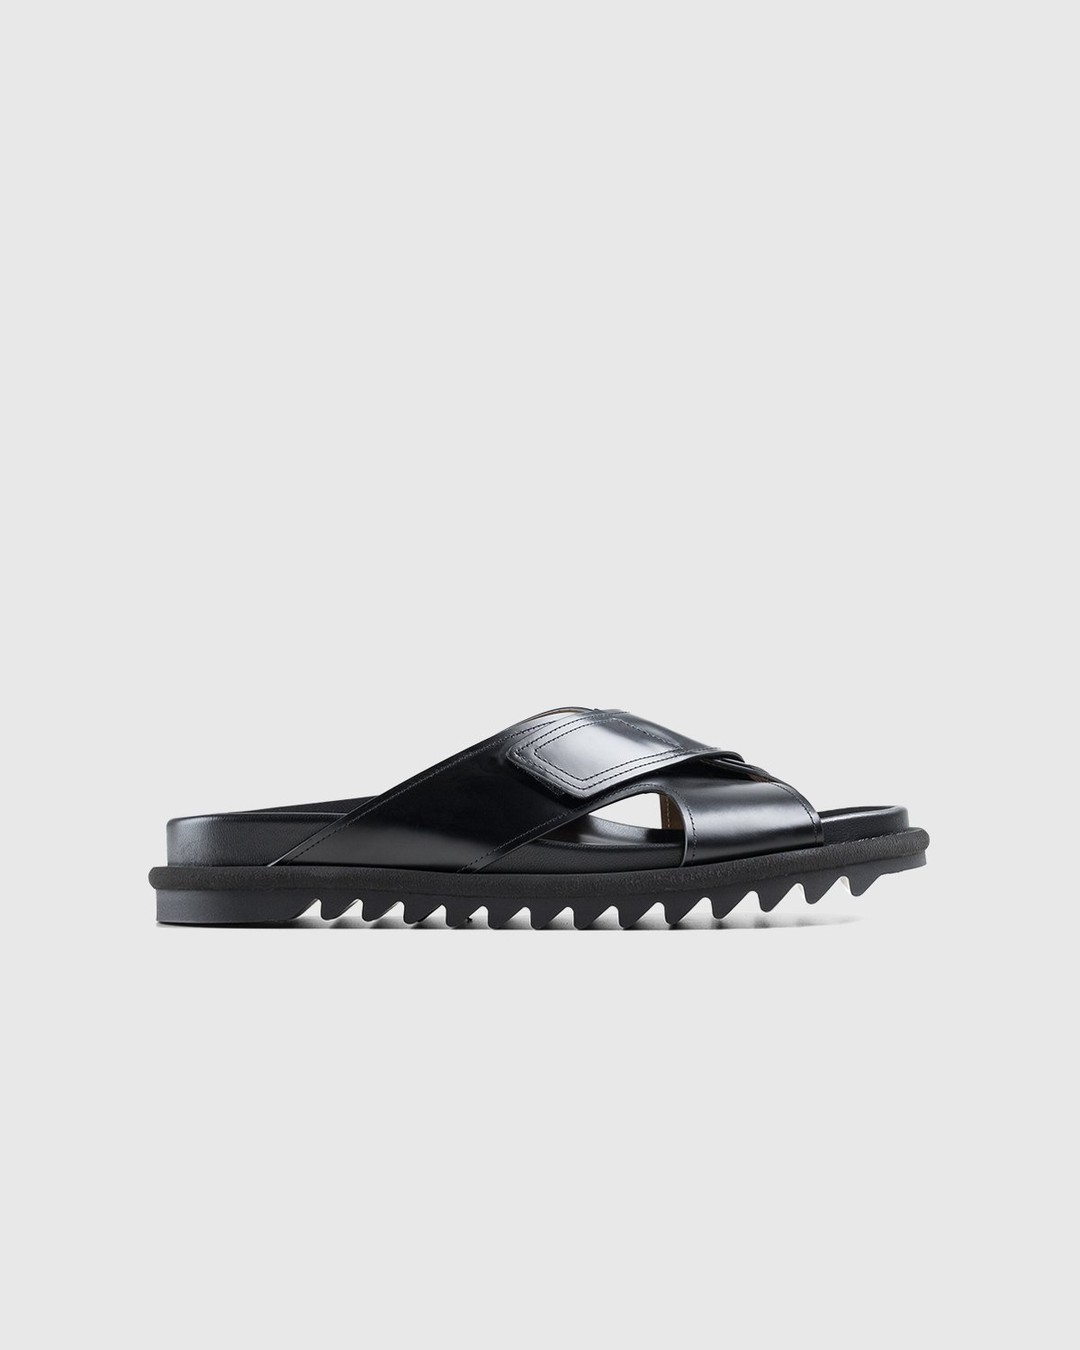 Dries van Noten – Leather Criss-Cross Sandals Black - Sandals - Black - Image 1